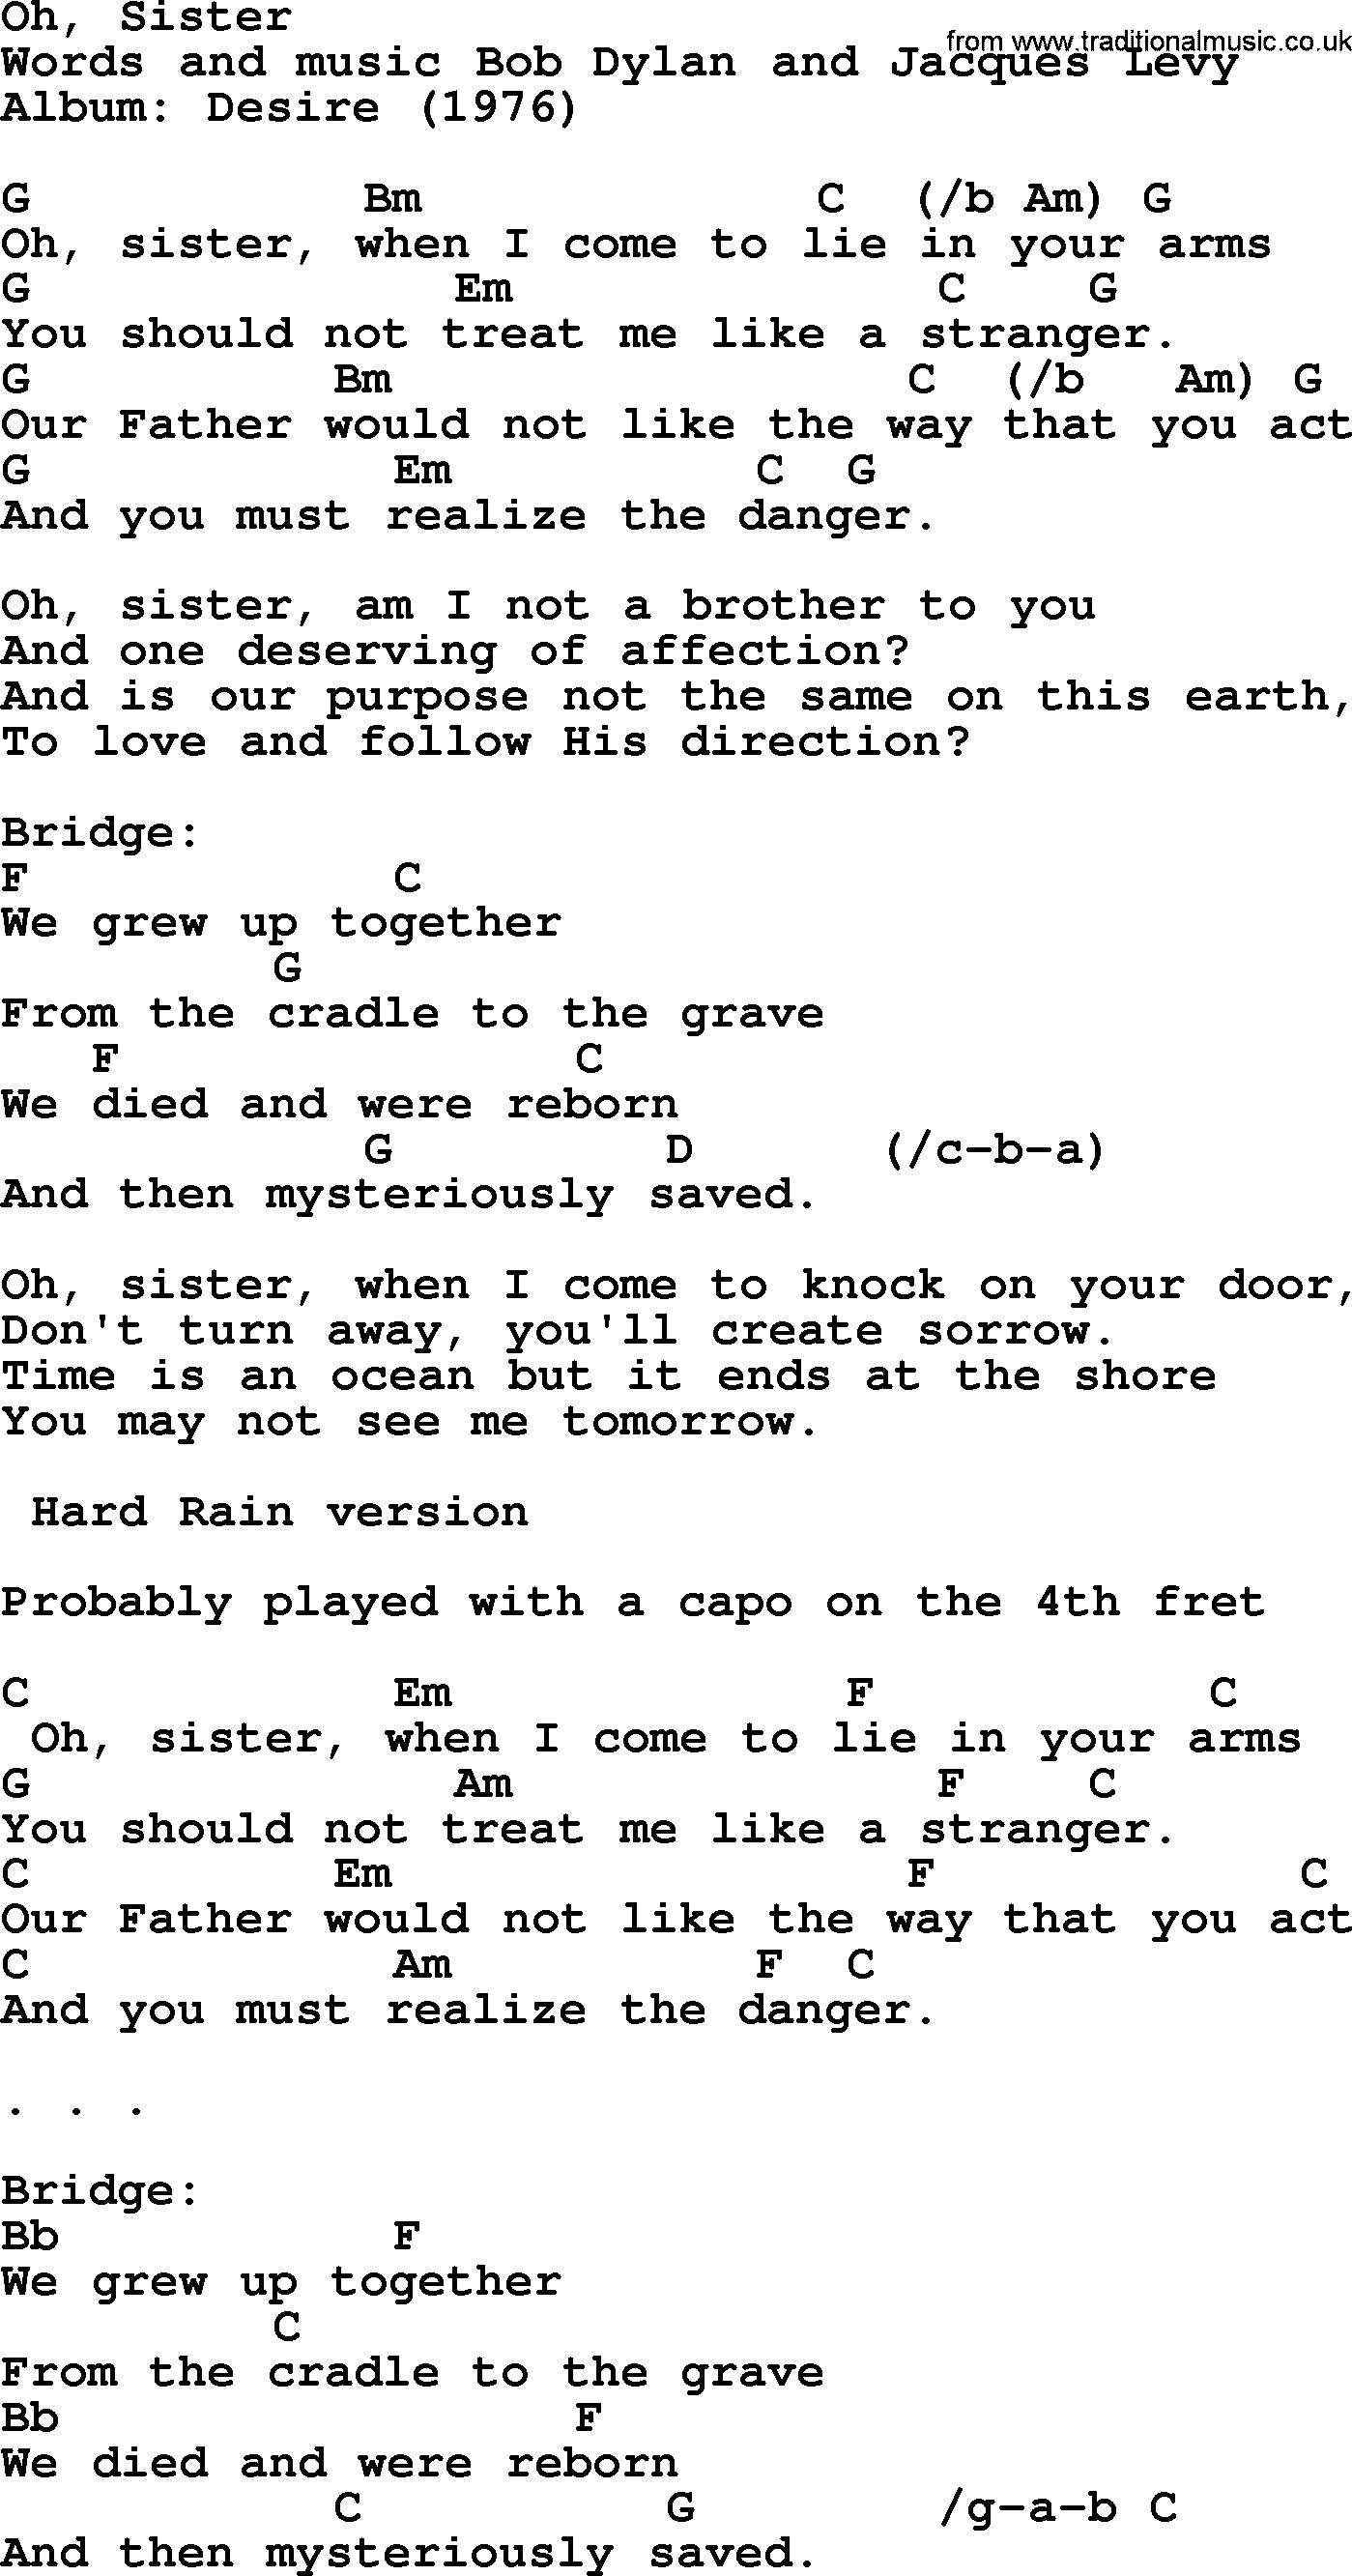 Bob Dylan song, lyrics with chords - Oh, Sister